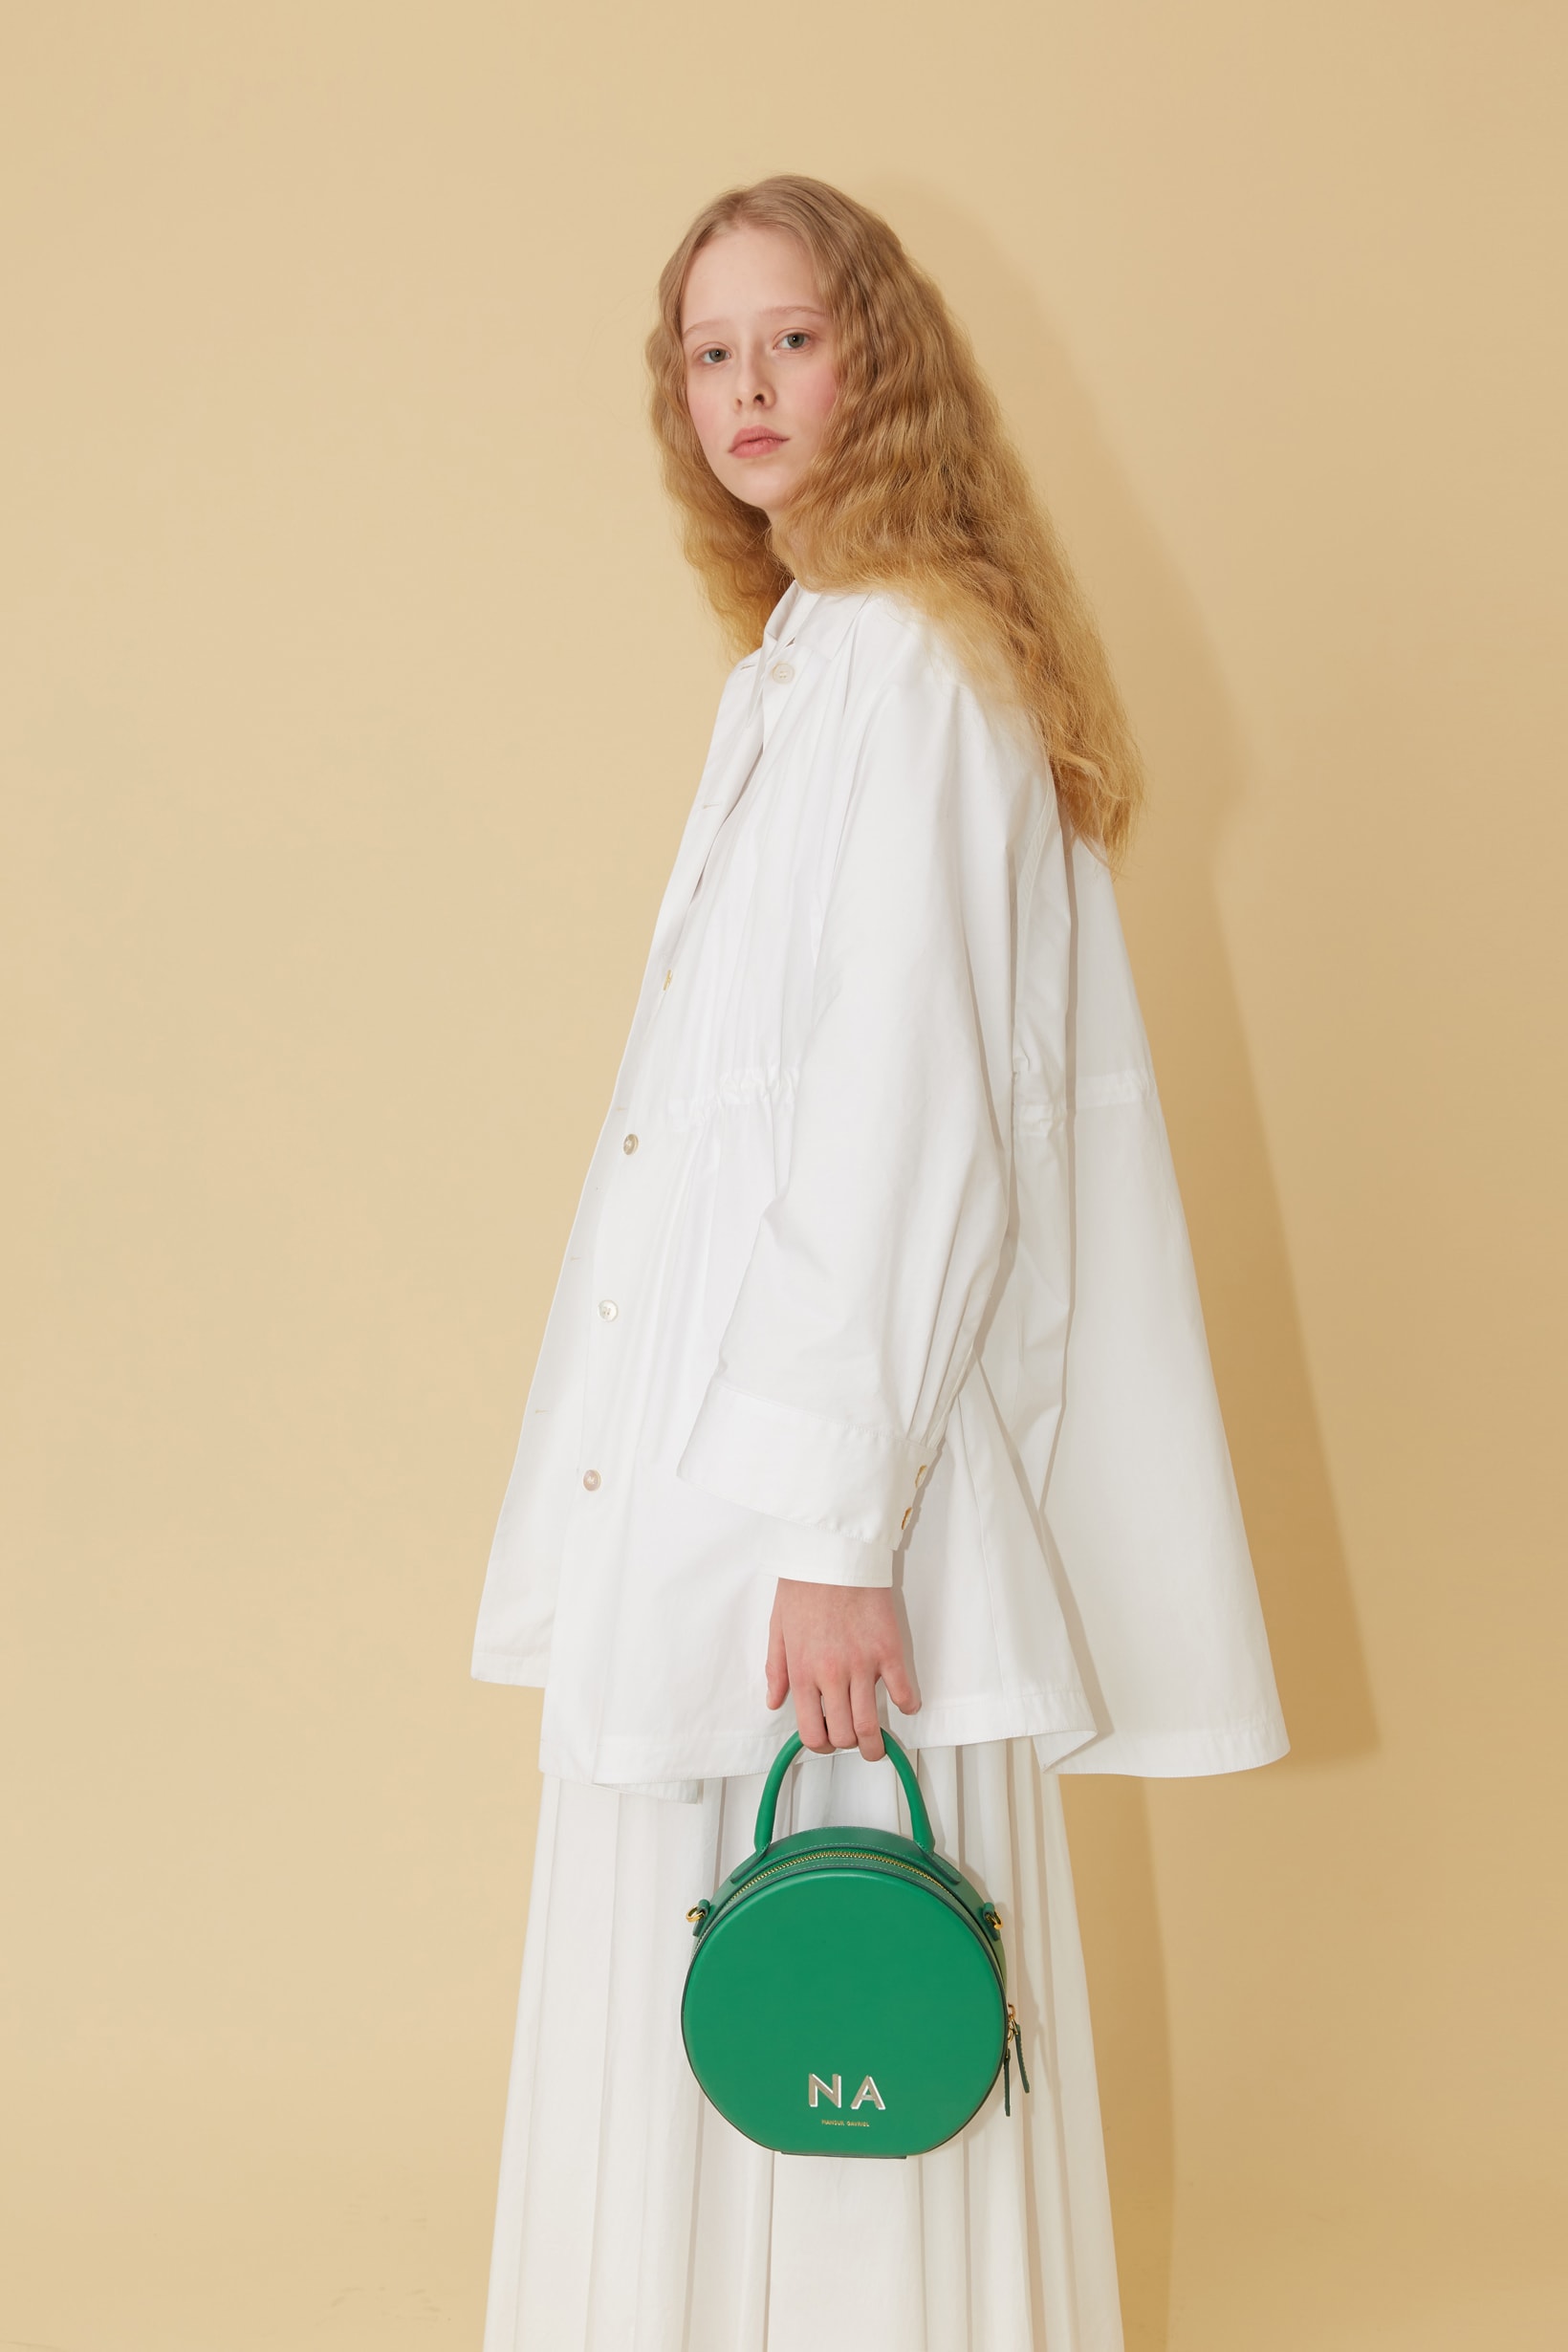 Mansur Gavriel Spring Summer 2019 Lookbook Jacket Skirt White Bag Green